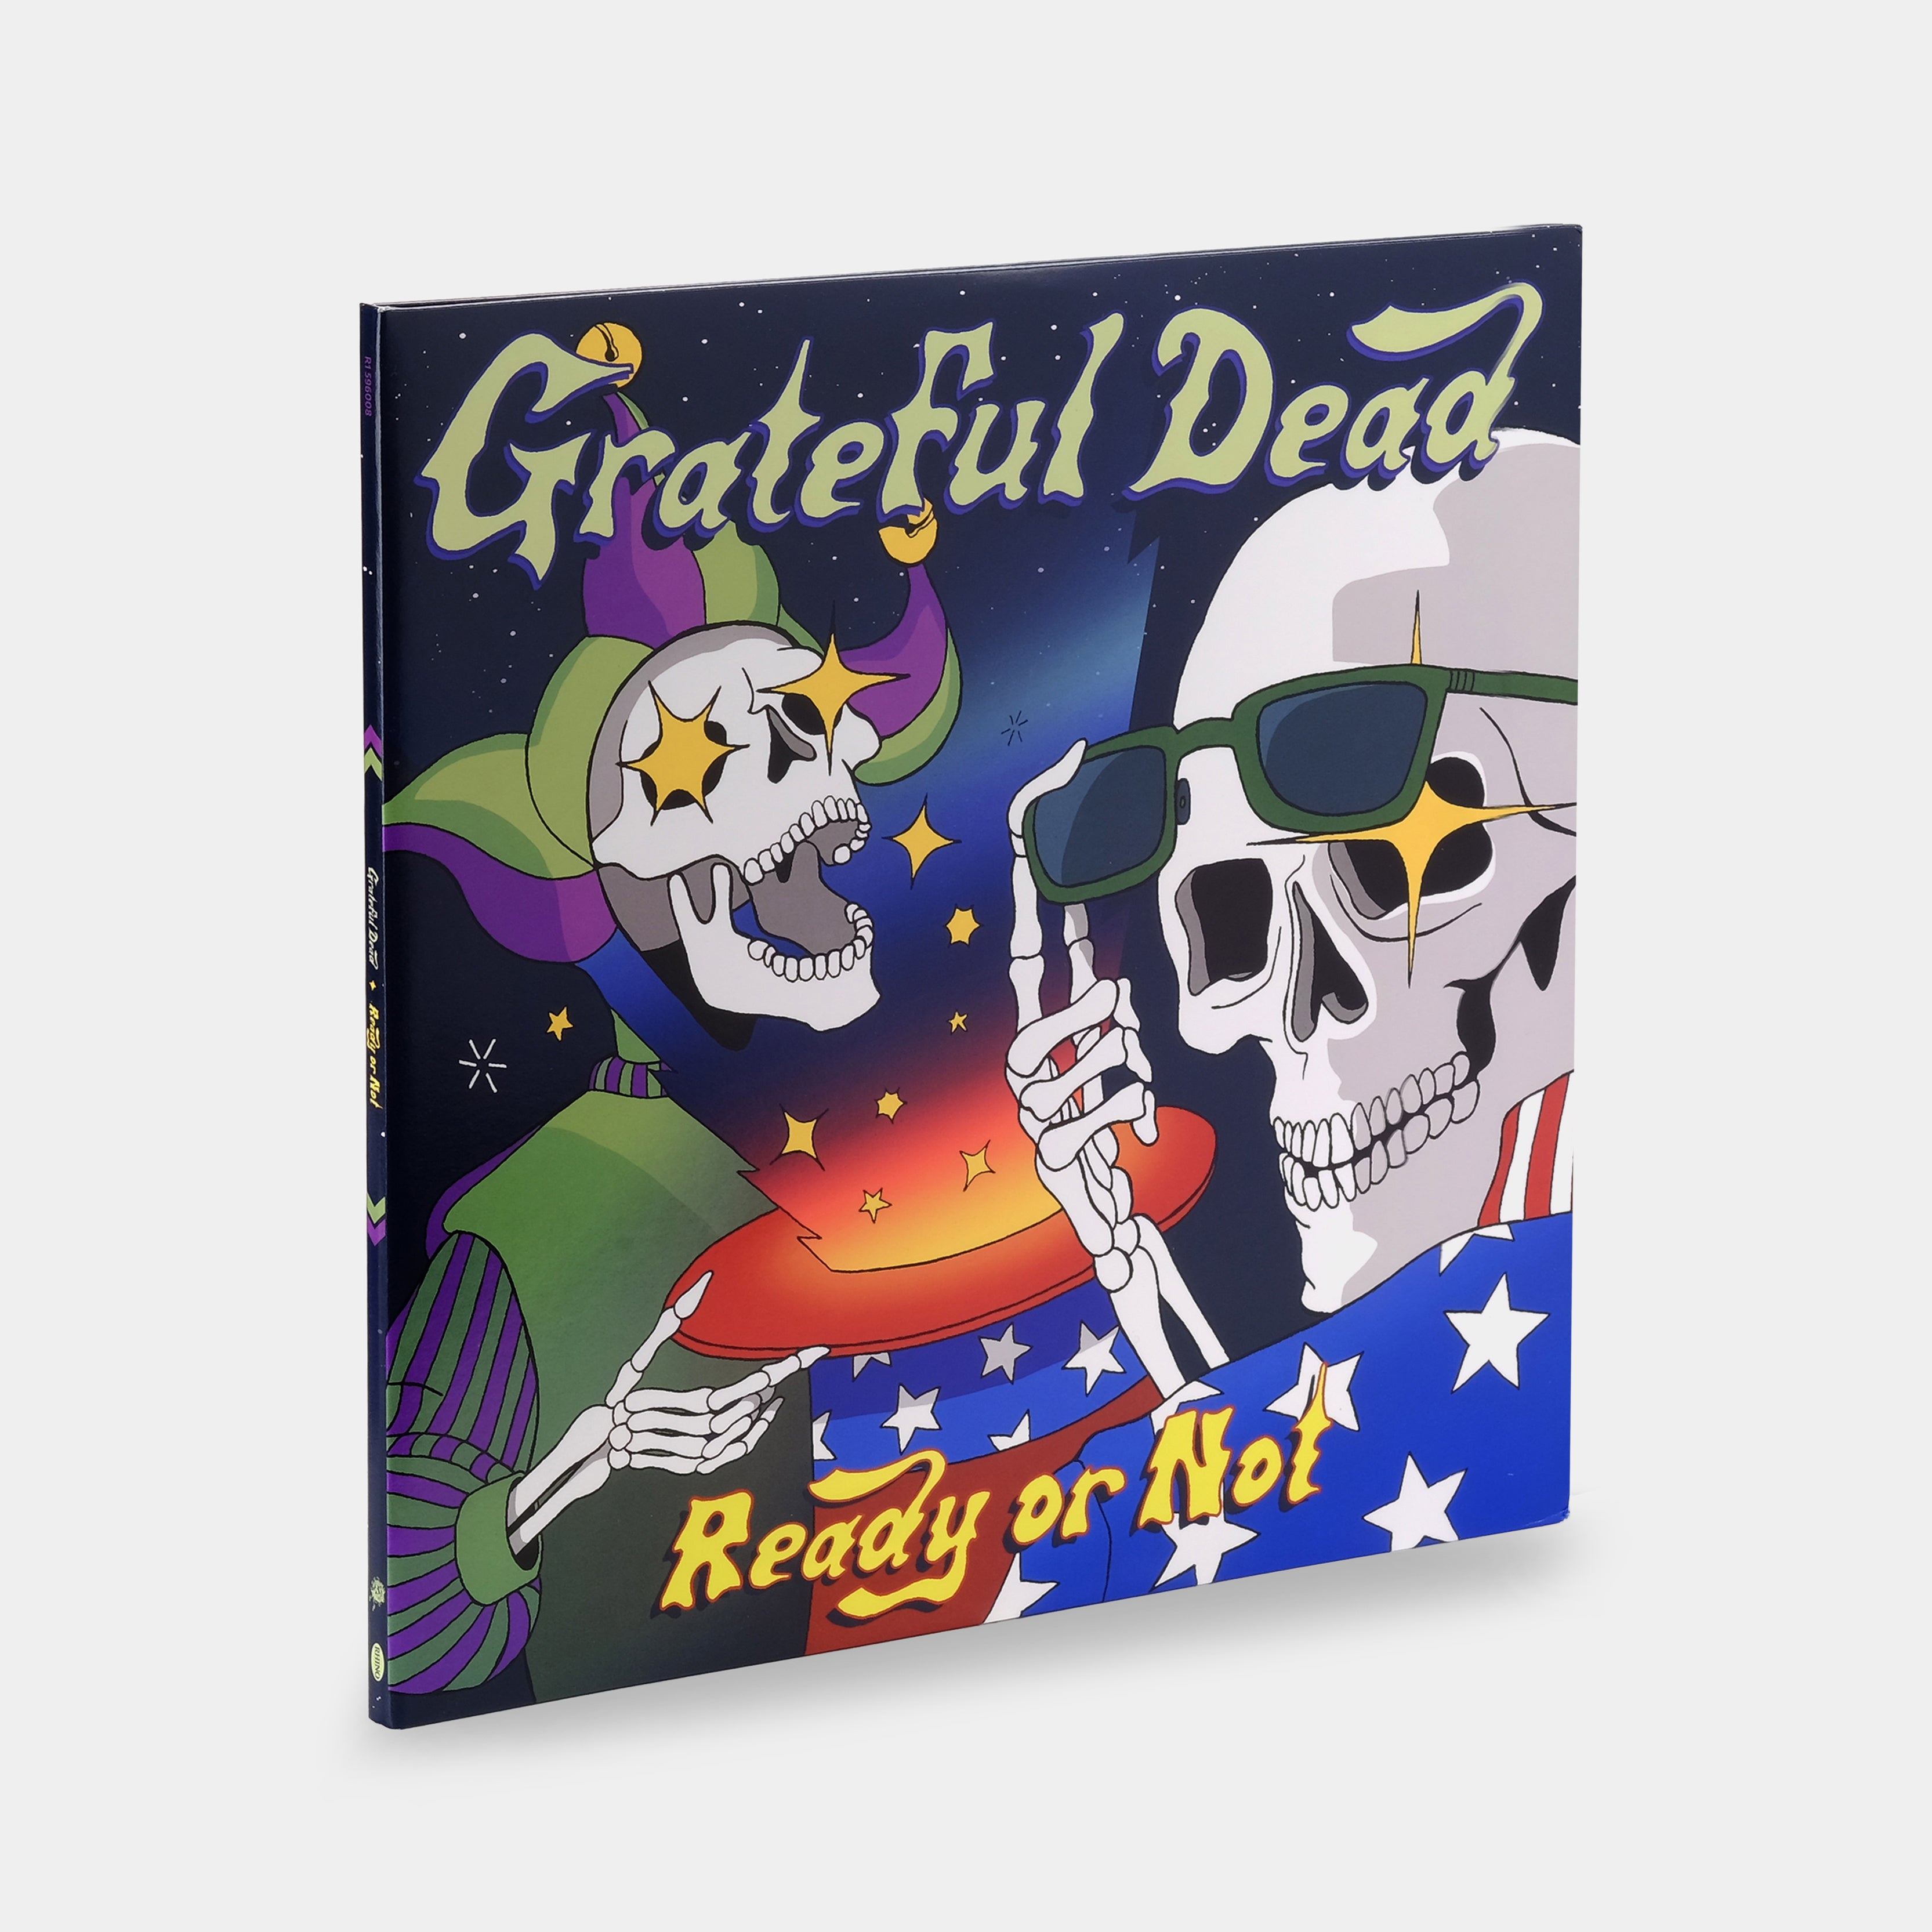 Grateful Dead - Ready Or Not 2xLP Vinyl Record